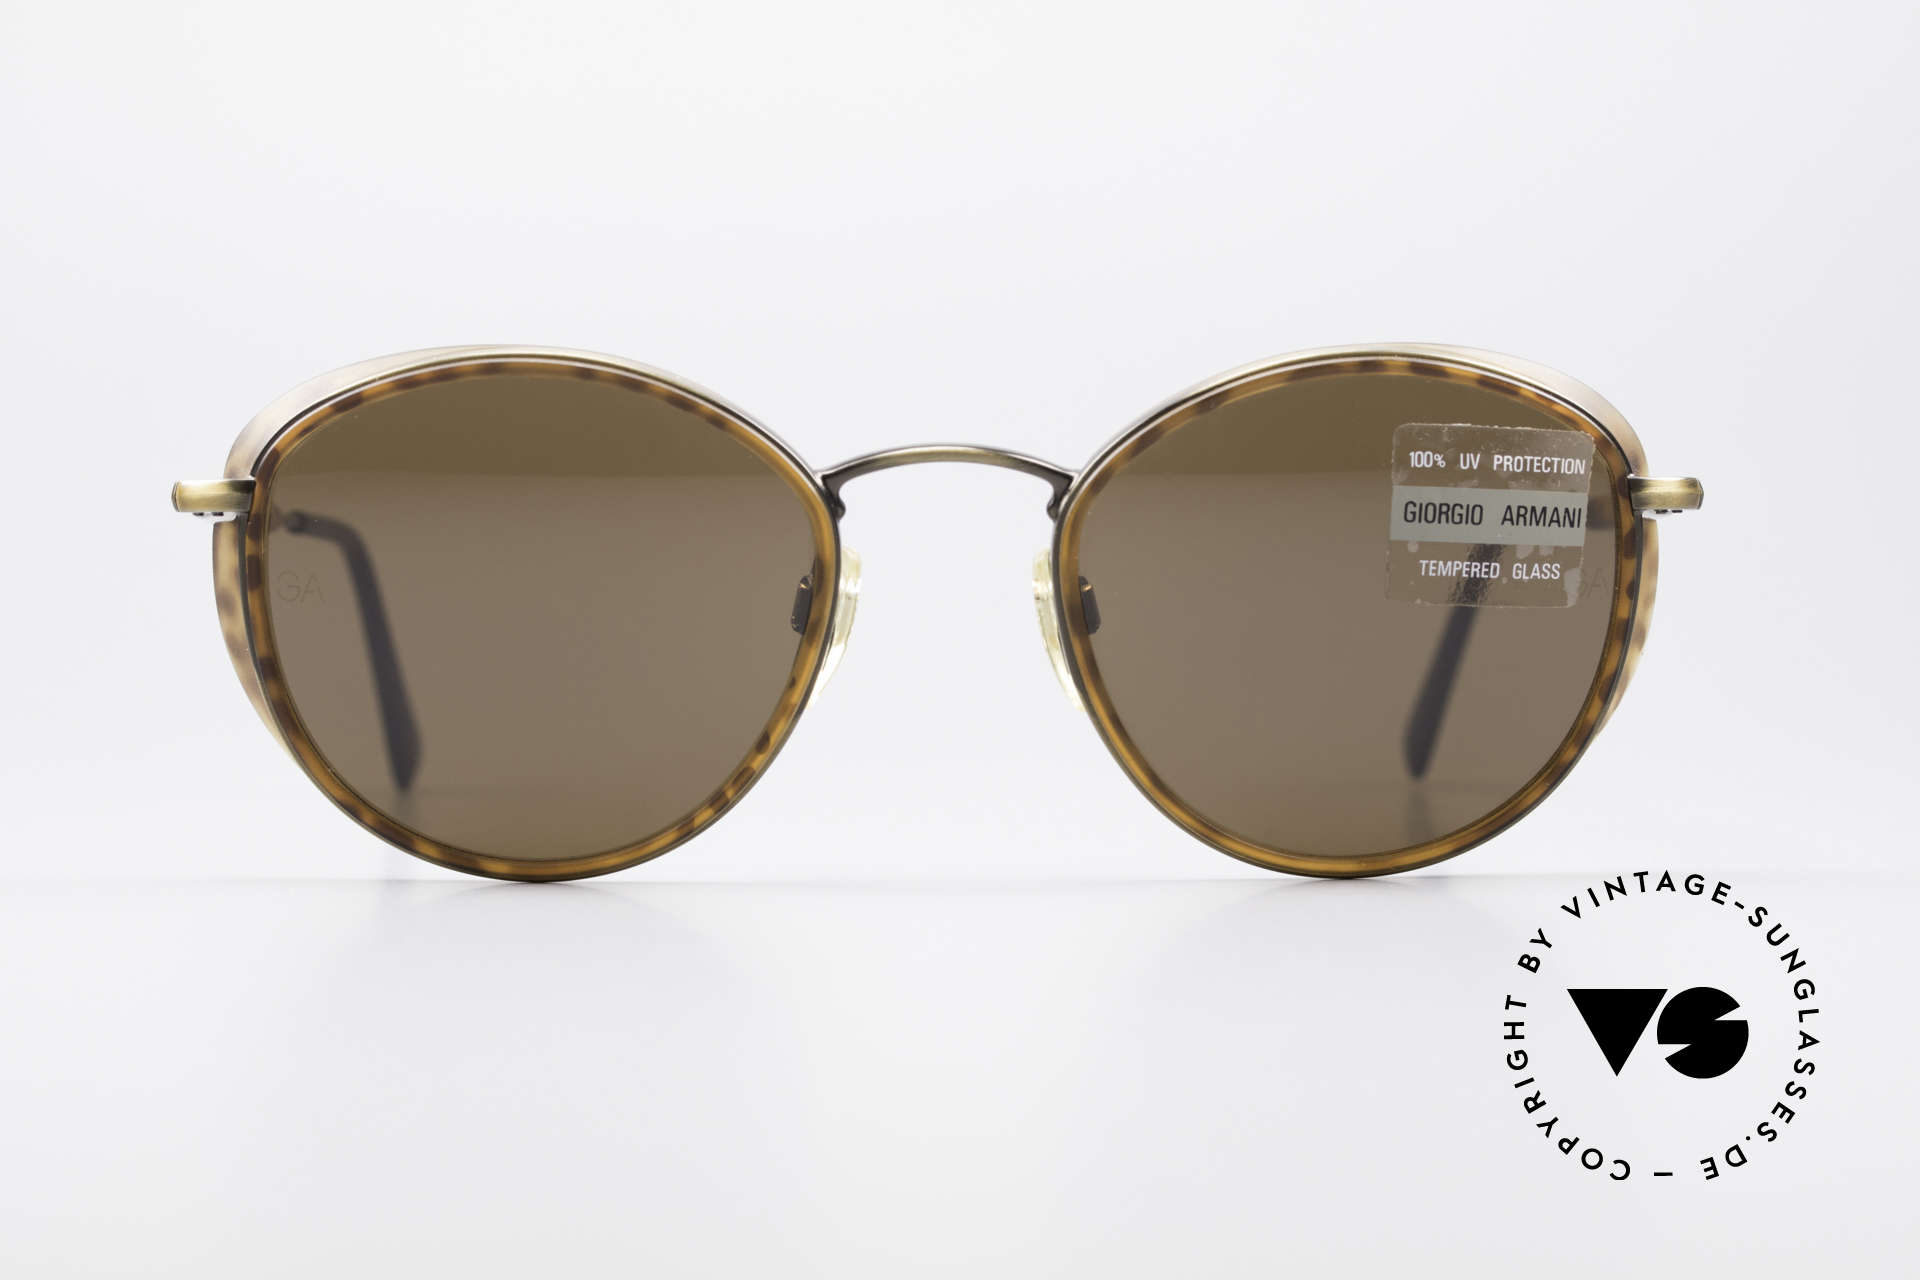 Sunglasses Giorgio Armani 655 Vintage Round 90's Shades